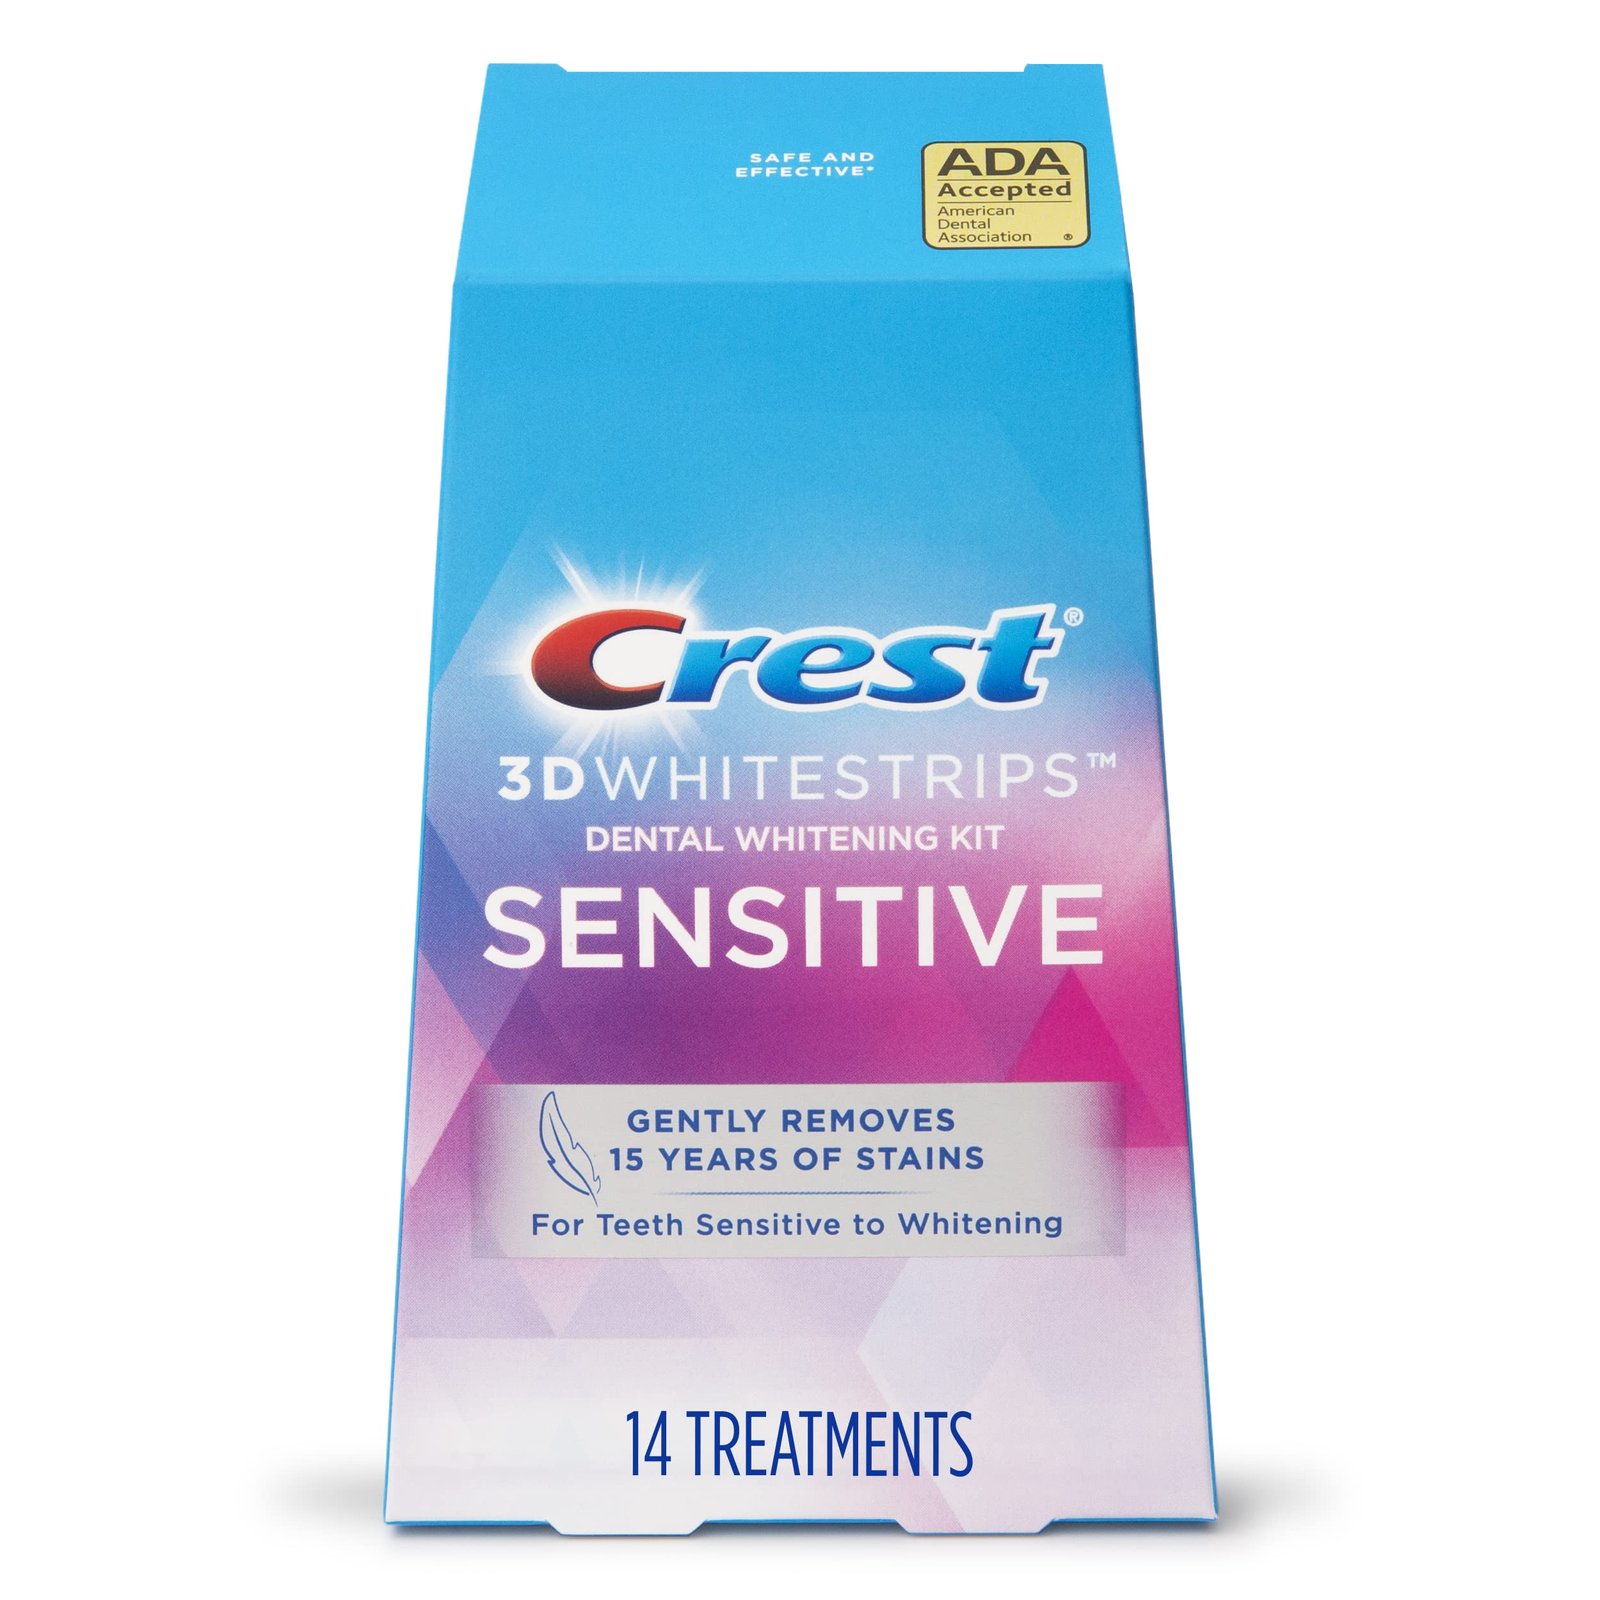 Can I Use Teeth Whitening Strips On Sensitive Teeth?